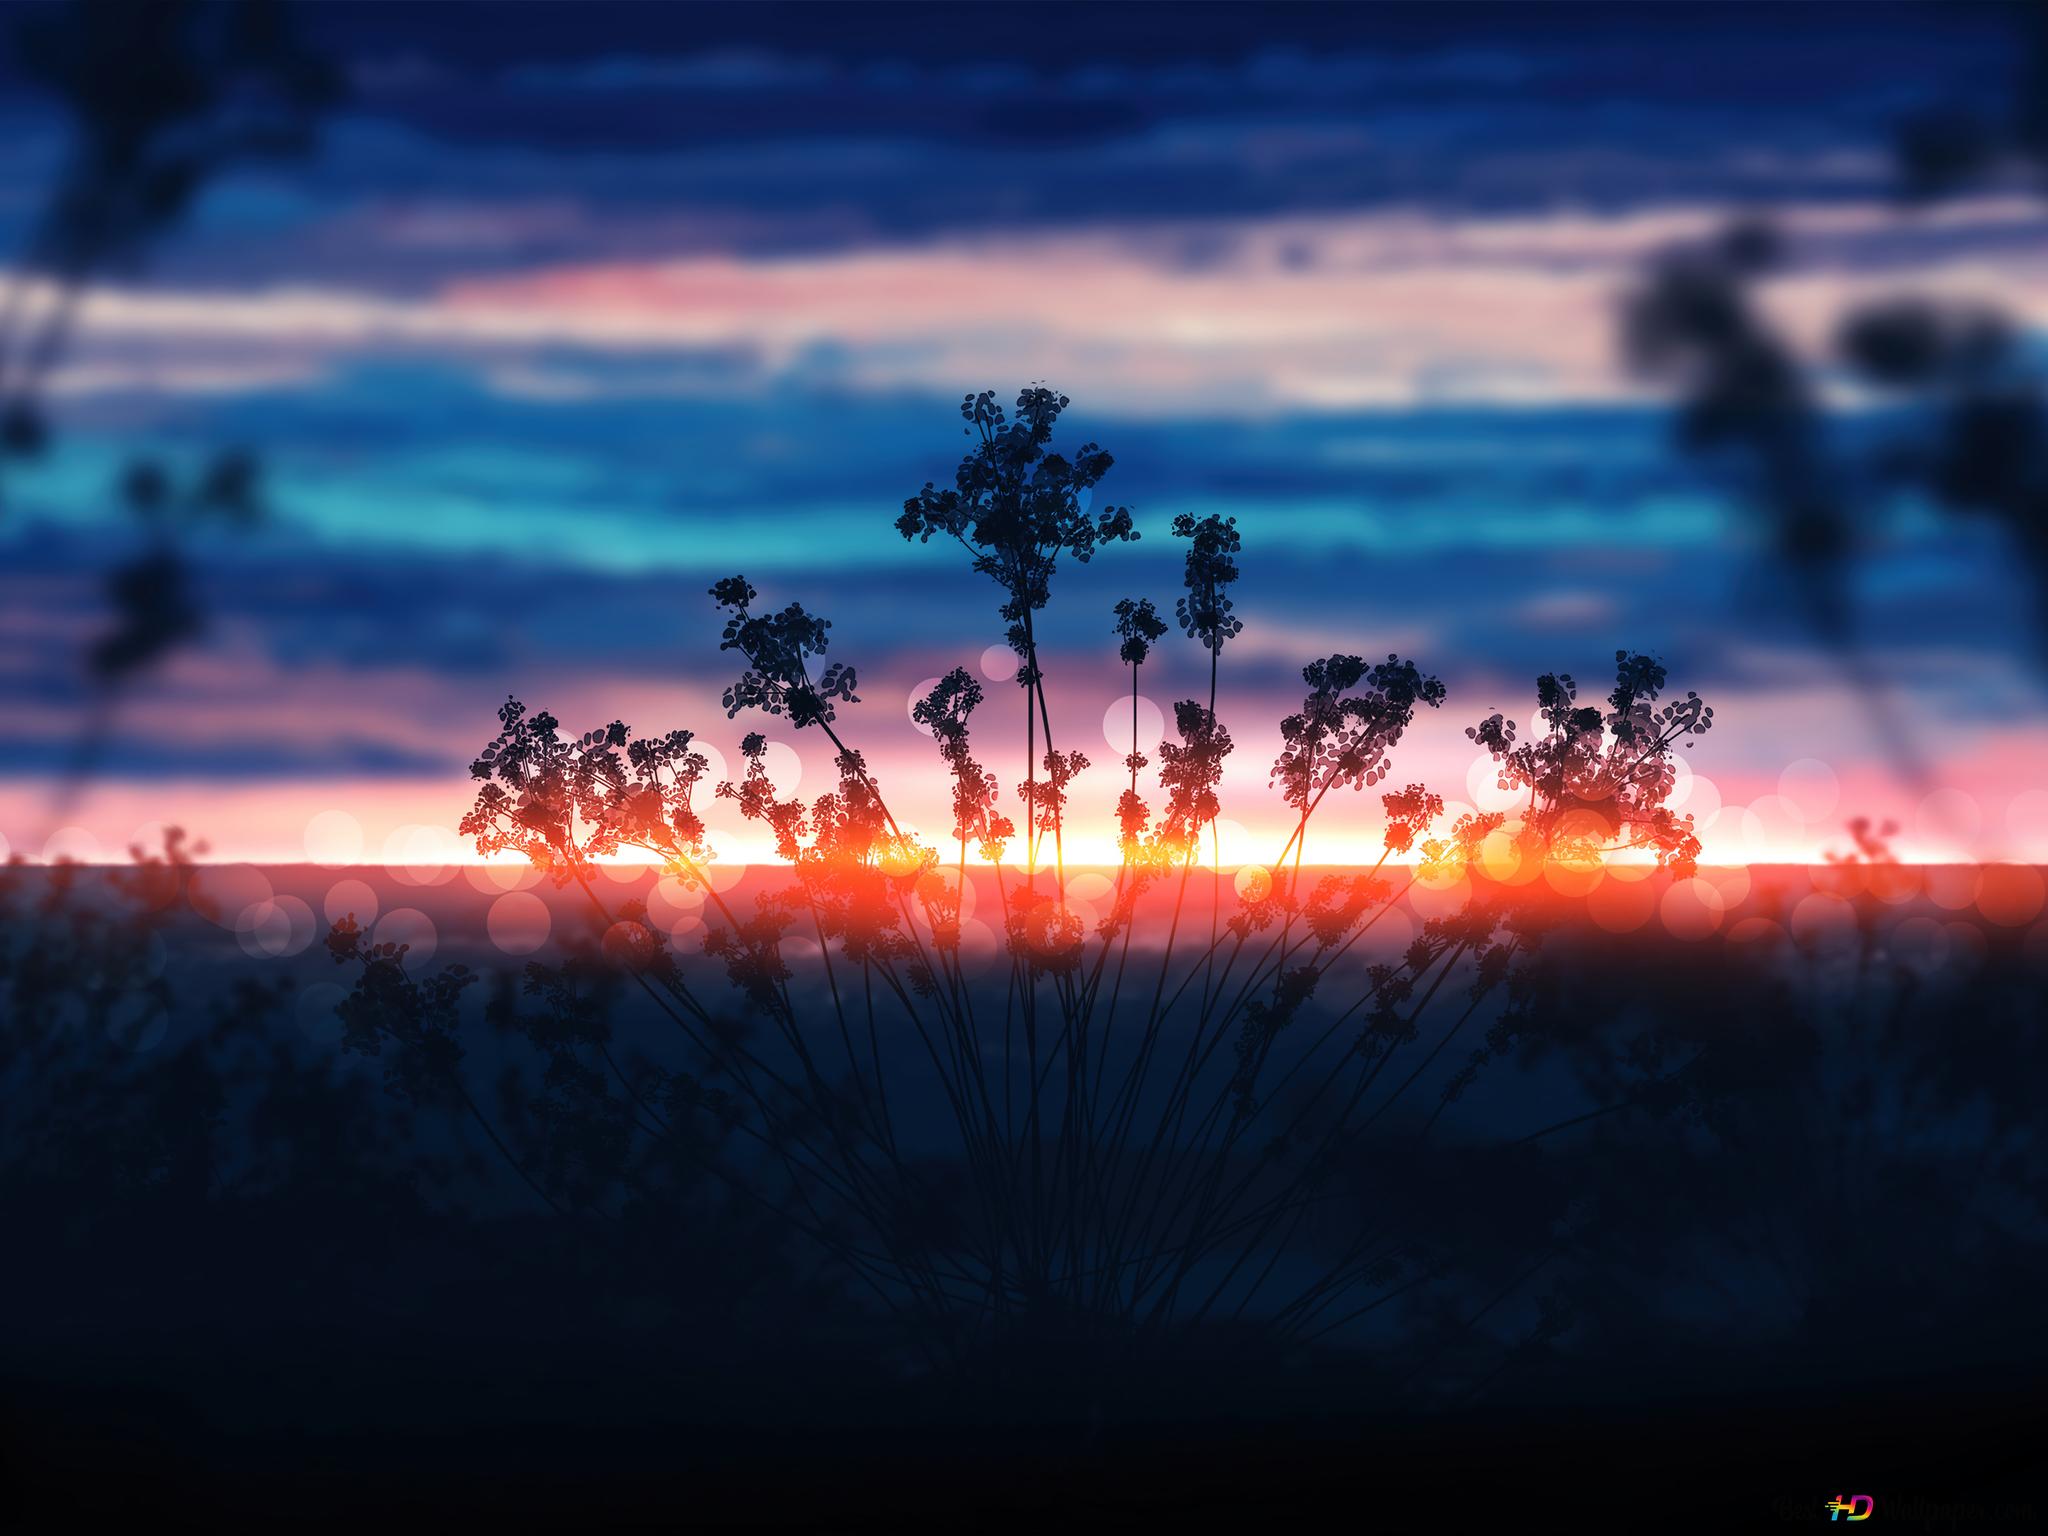 Sunrise scenery flower art 4K wallpaper download